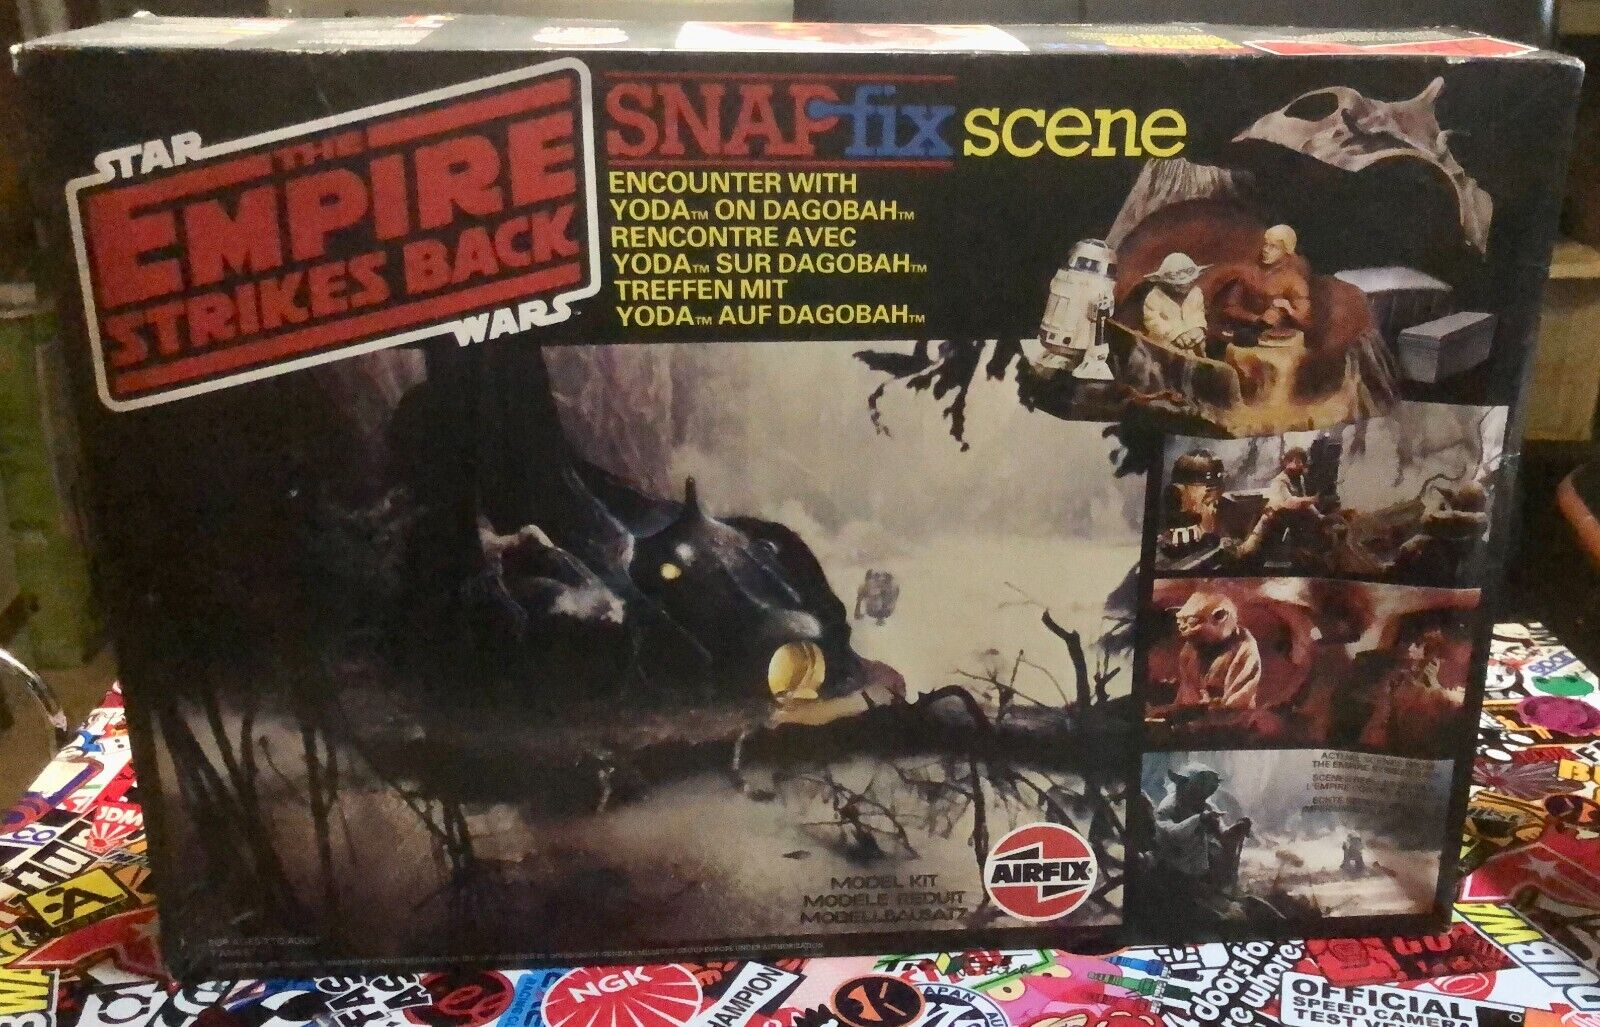 Star Wars Action Scene Encounter With Yoda On Dagobah Snap Fix Scene 1982 AIRFIX